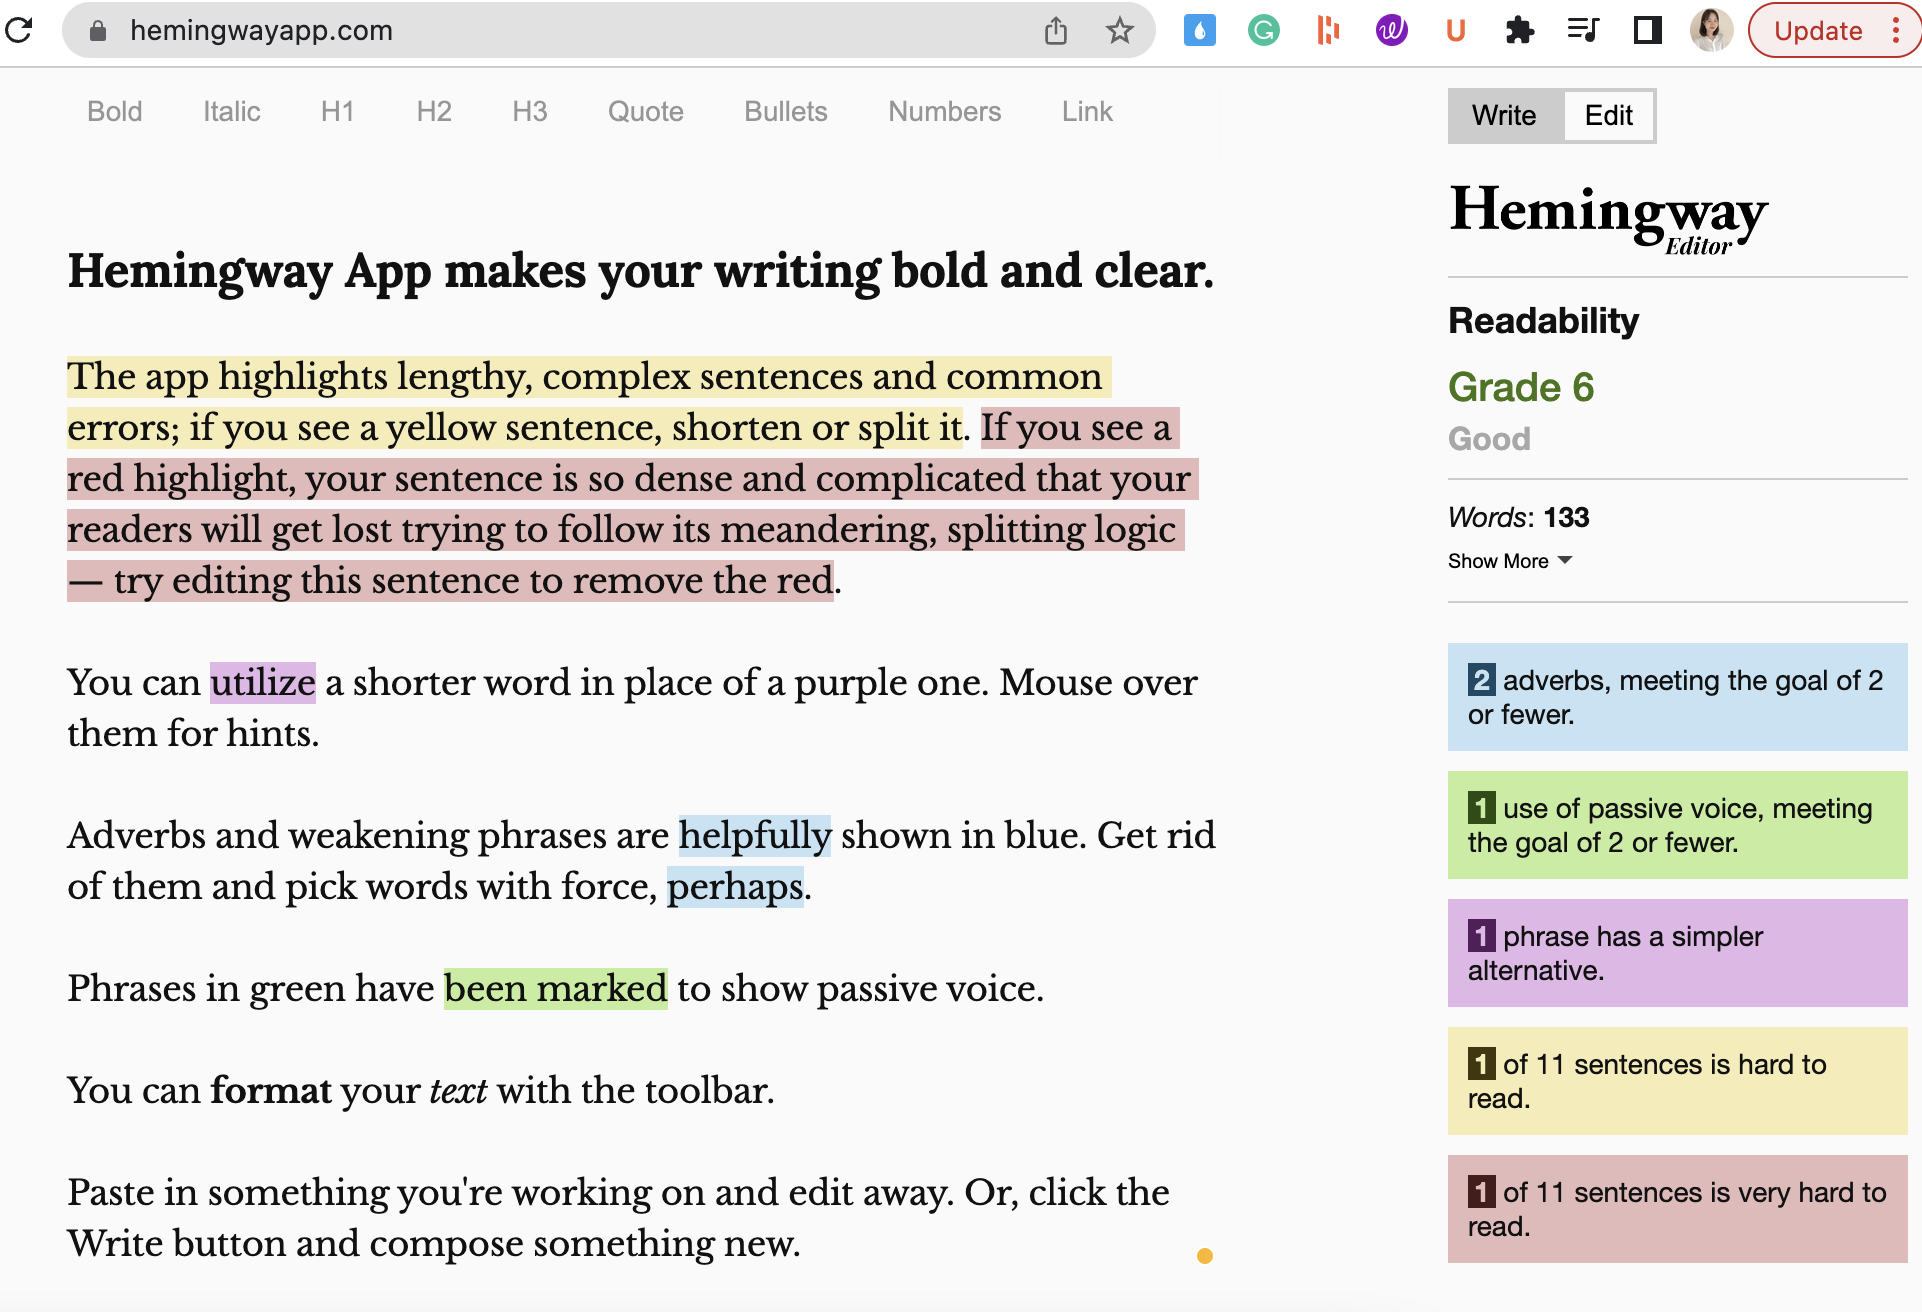 How To Write SEO Friendly Content - Hemingway App